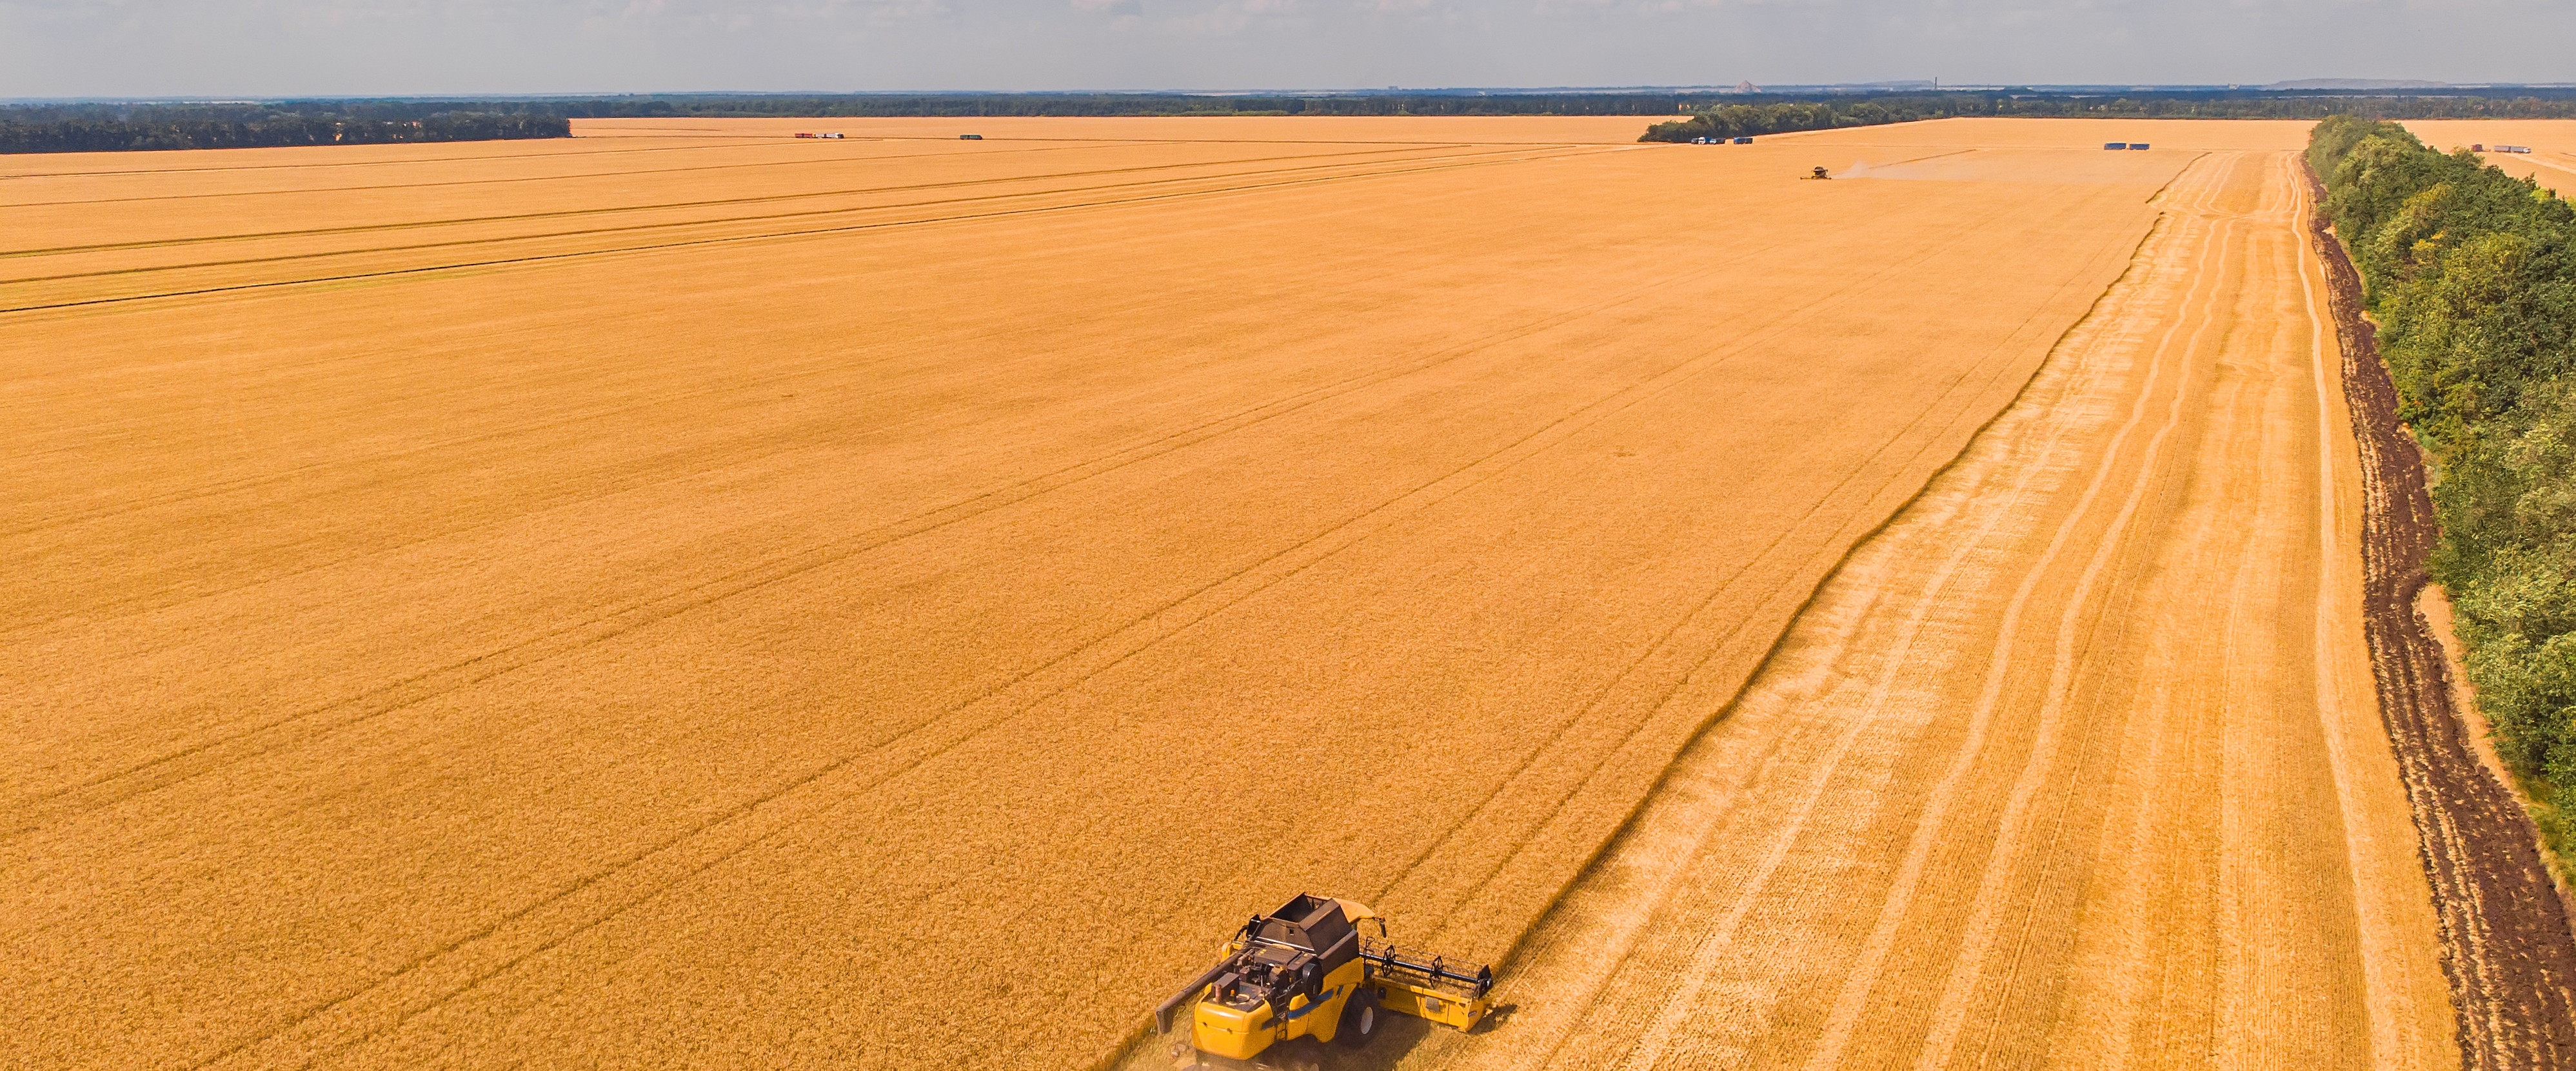 Aerial View Of Summer Harvest Combine Harvester Harvesting Large Field